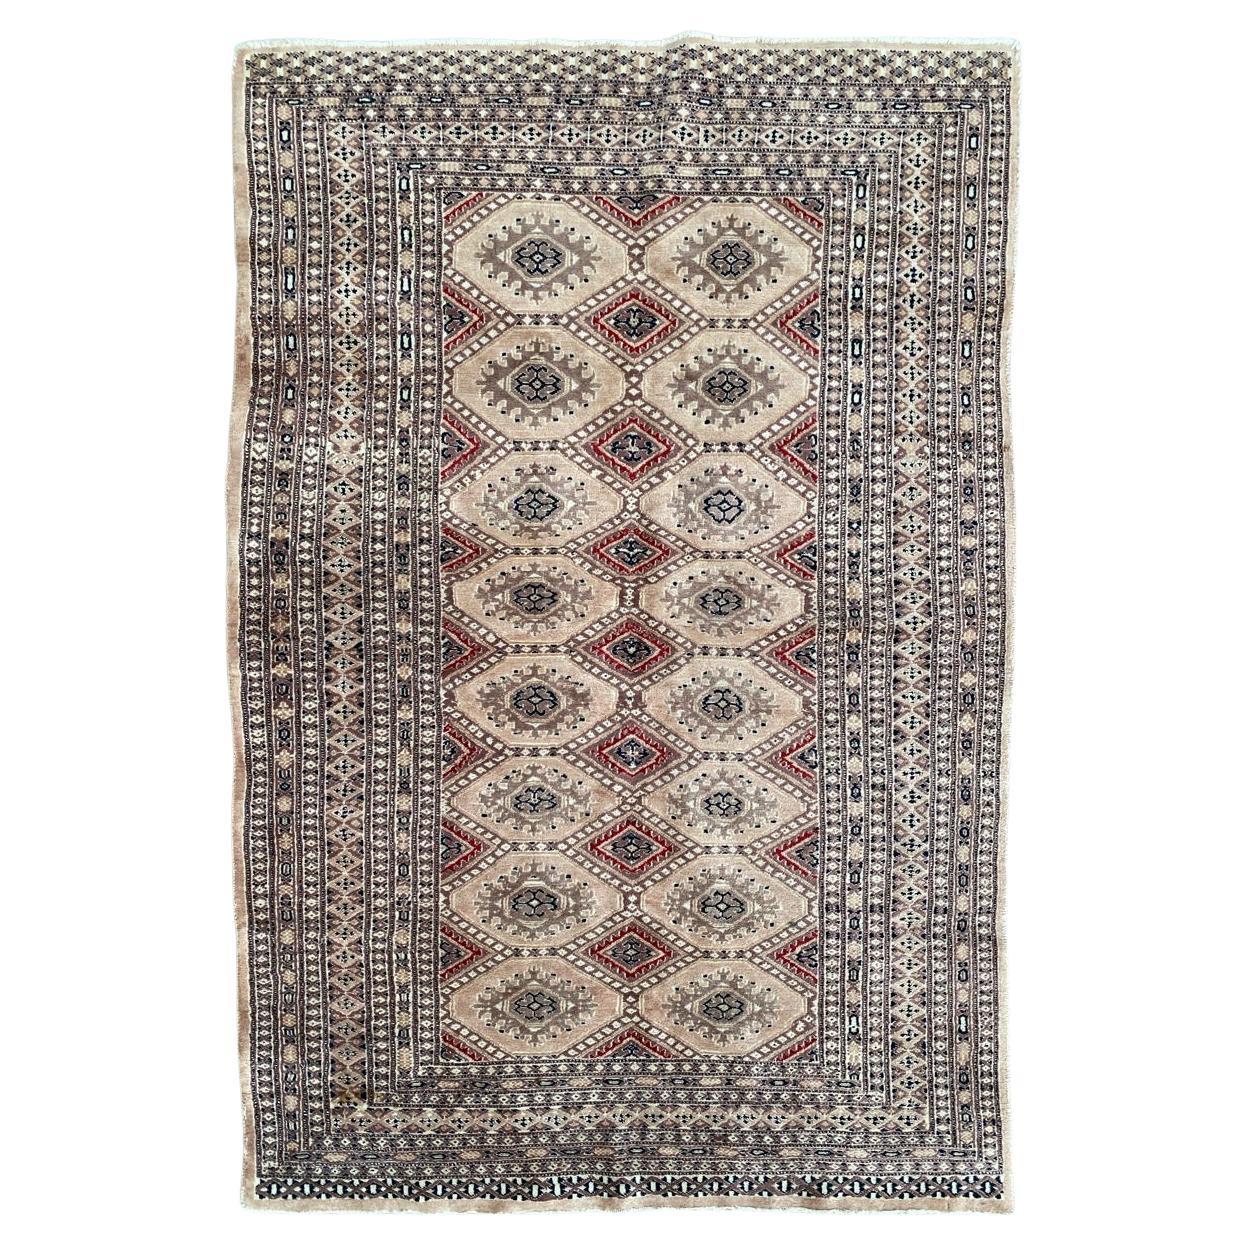 Le joli tapis pakistanais vintage de Bobyrug